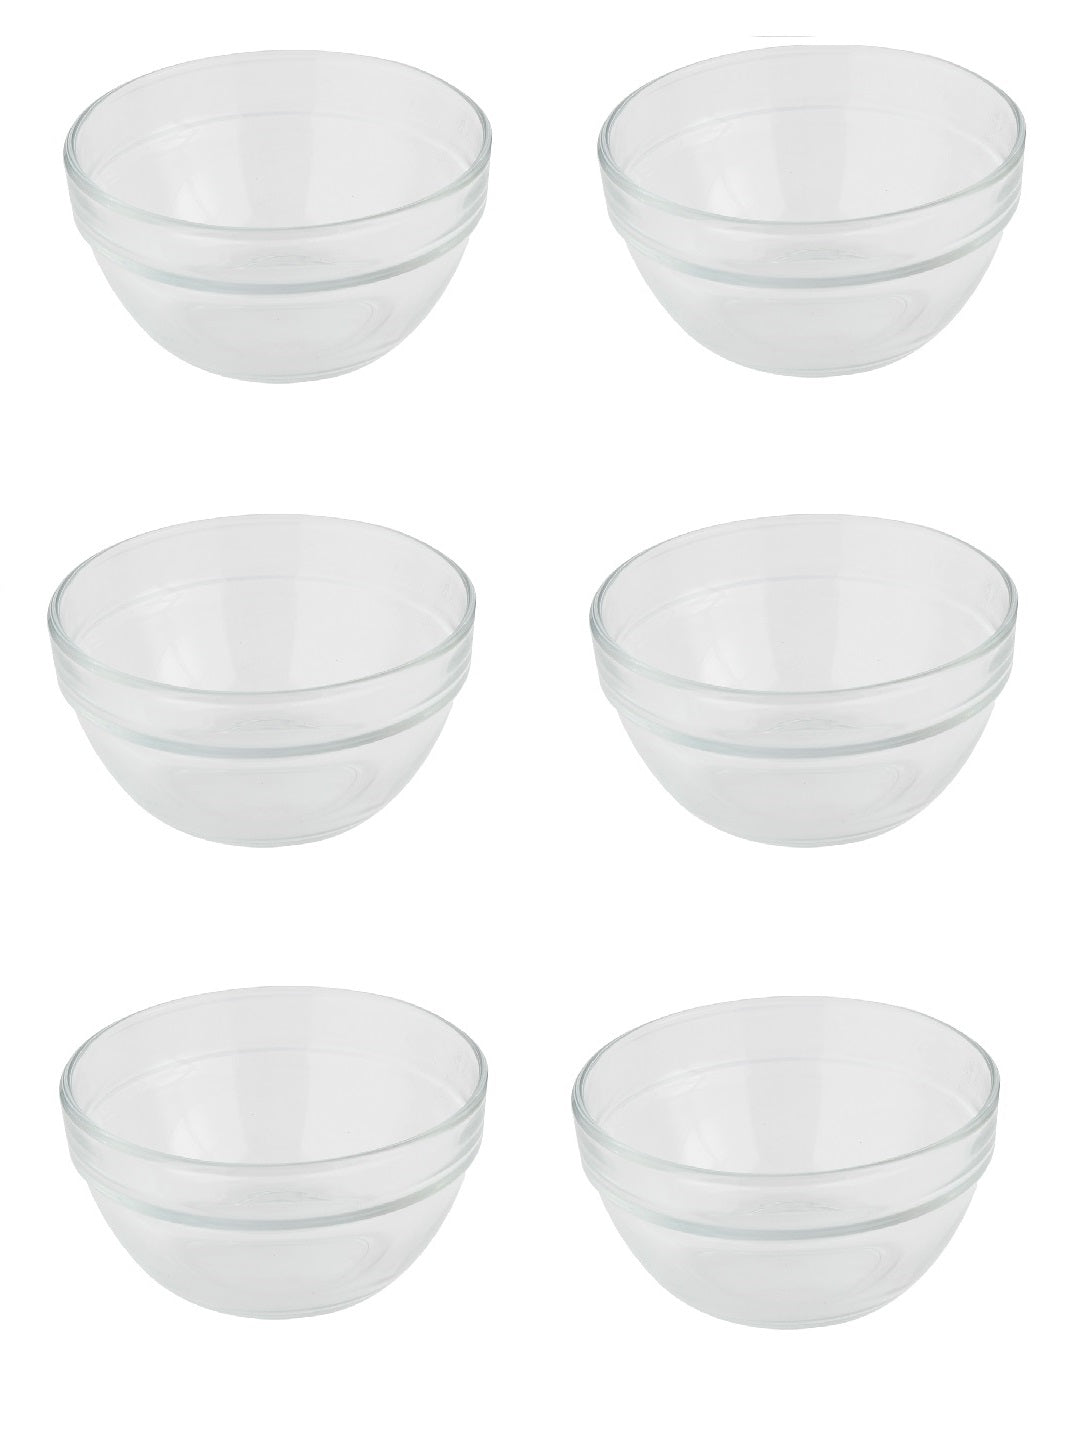 Uniglass Stackable Salad/Curry/Dessert/Serving Glass Bowls Set (Transparent, 370ml) - Set of 6